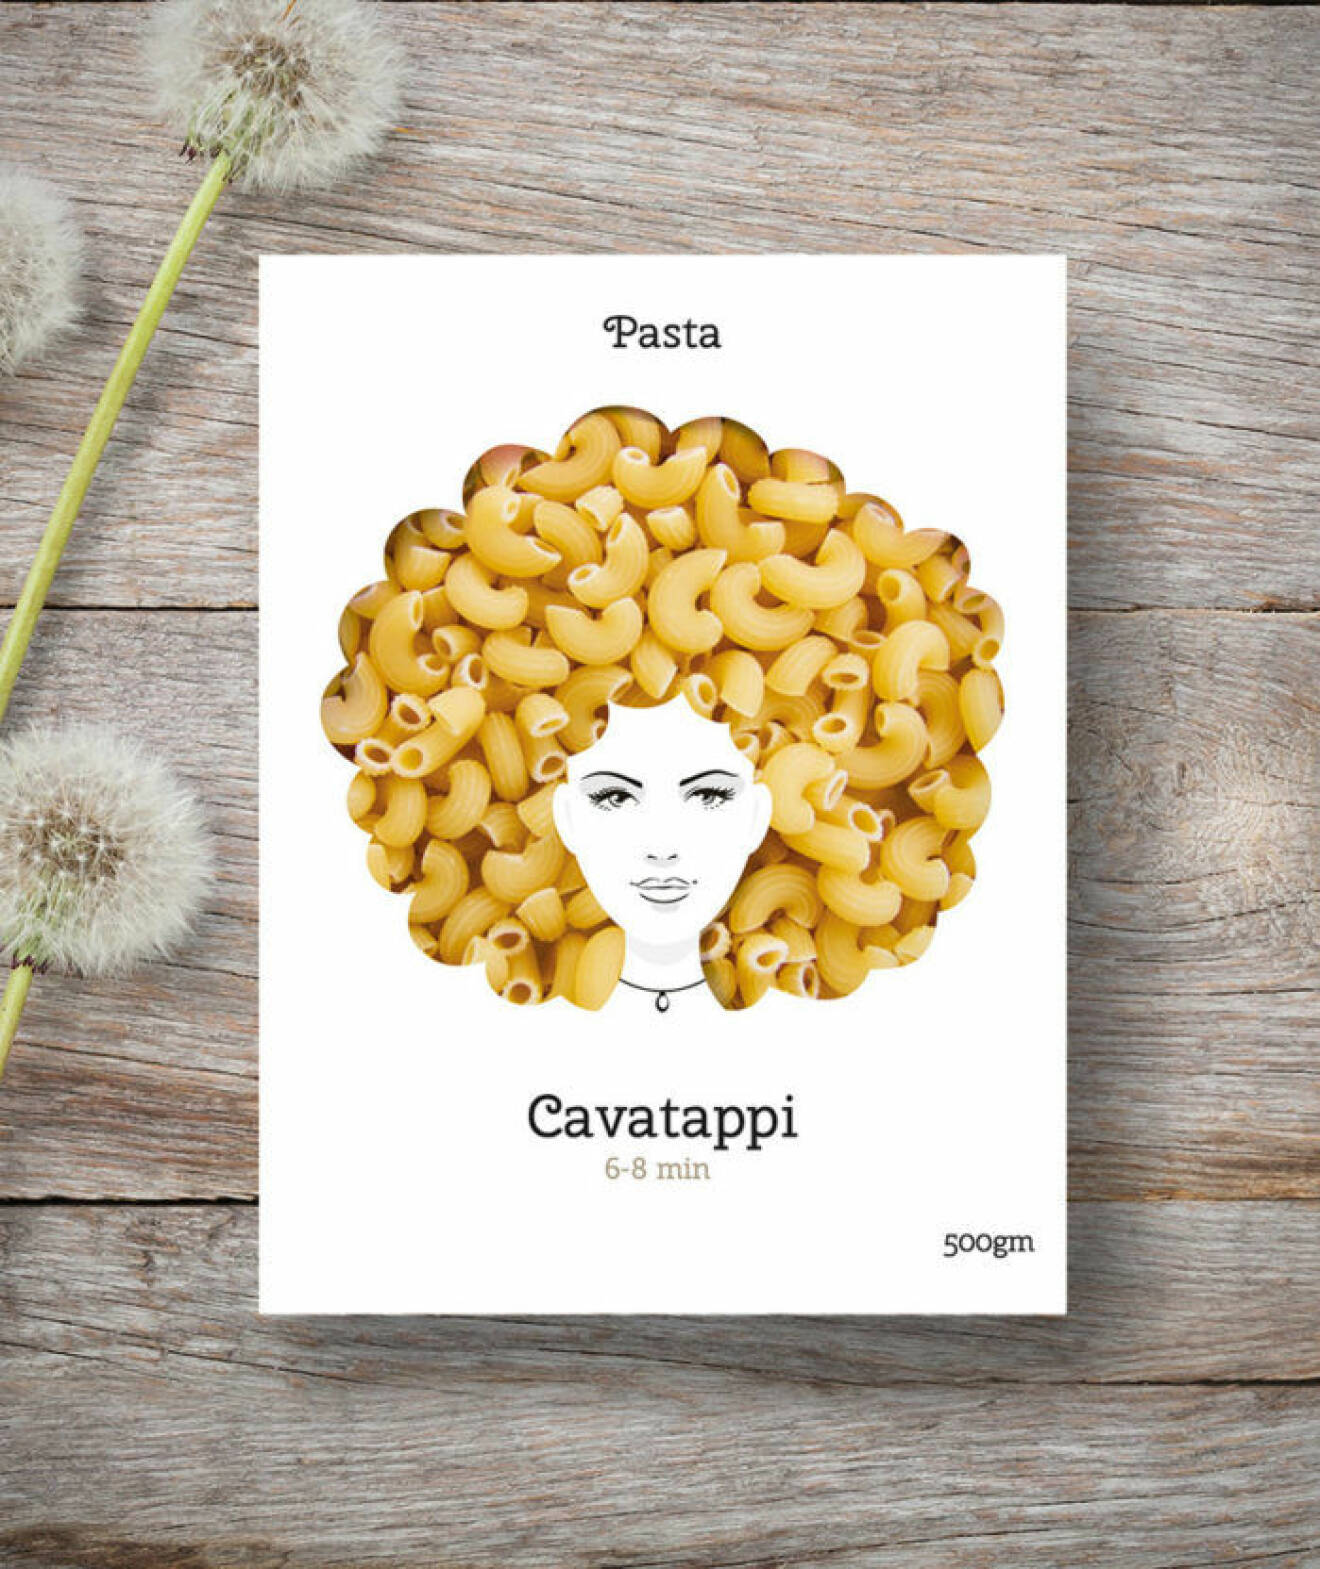 Good hair day pasta – cavatappi.